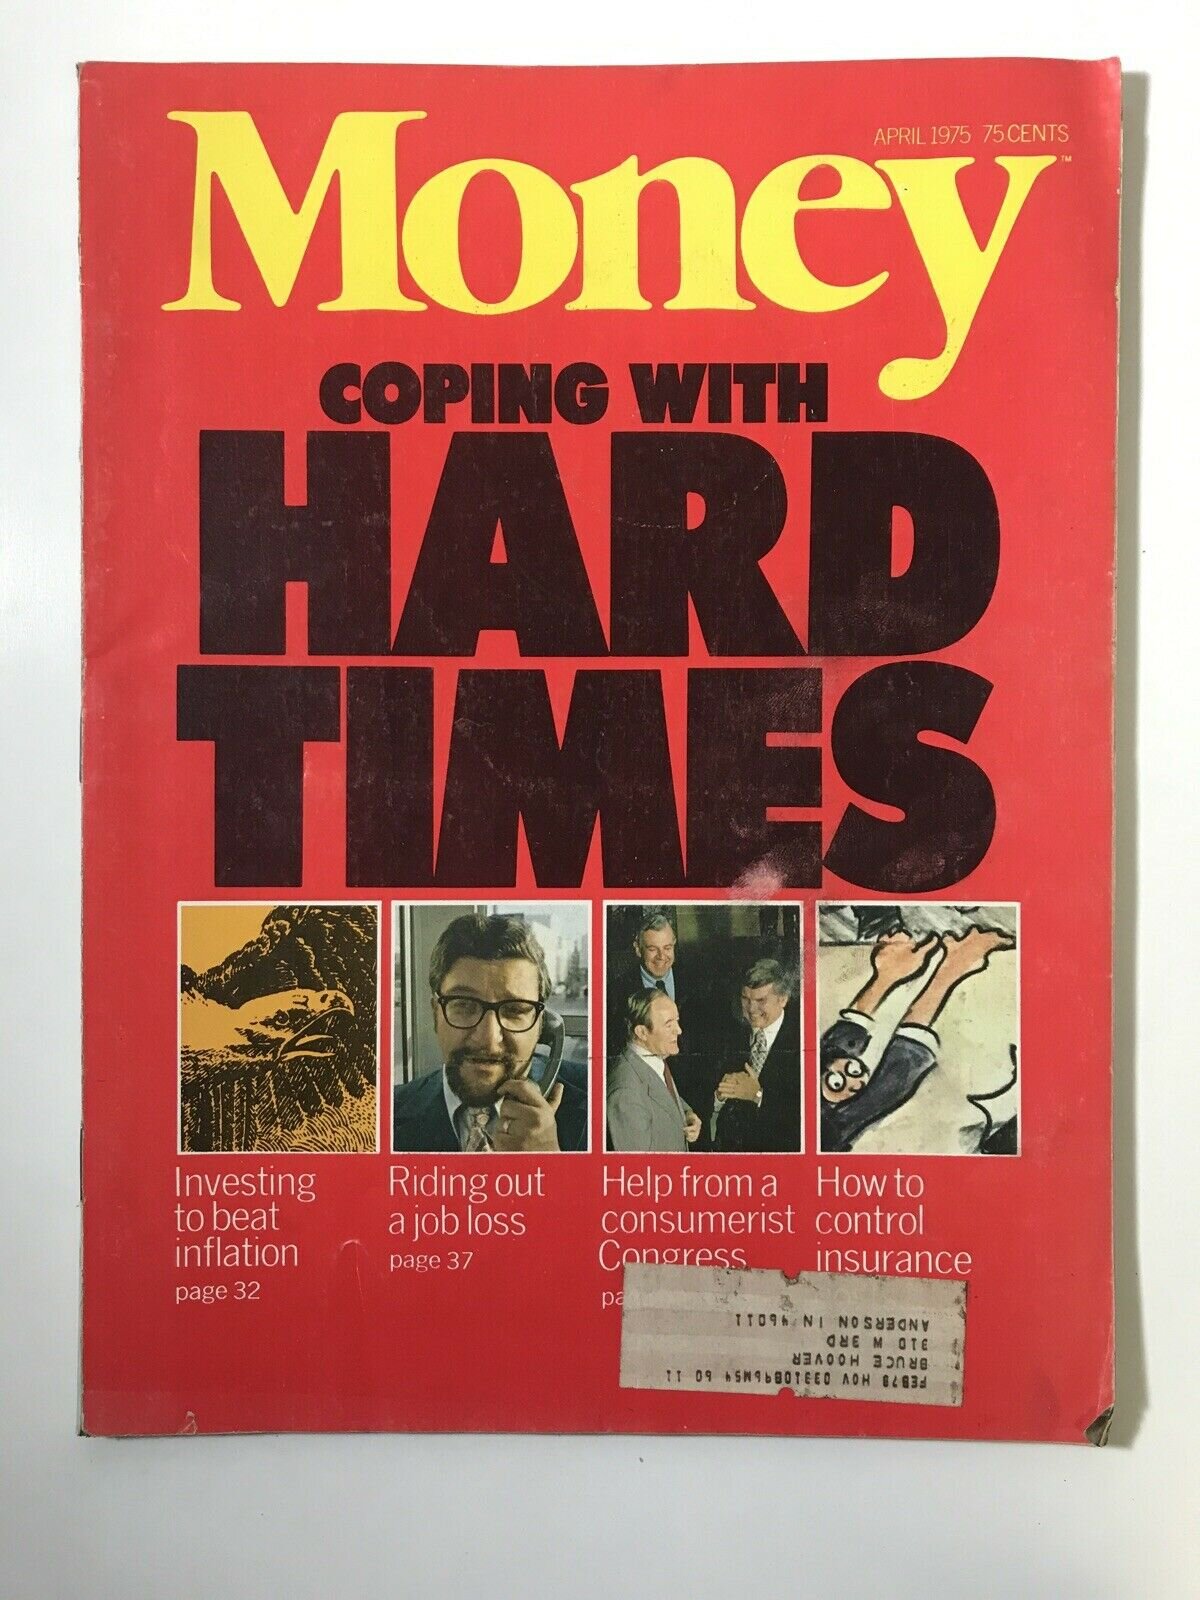 Fullerton_Money Magazine_Coping.jpeg